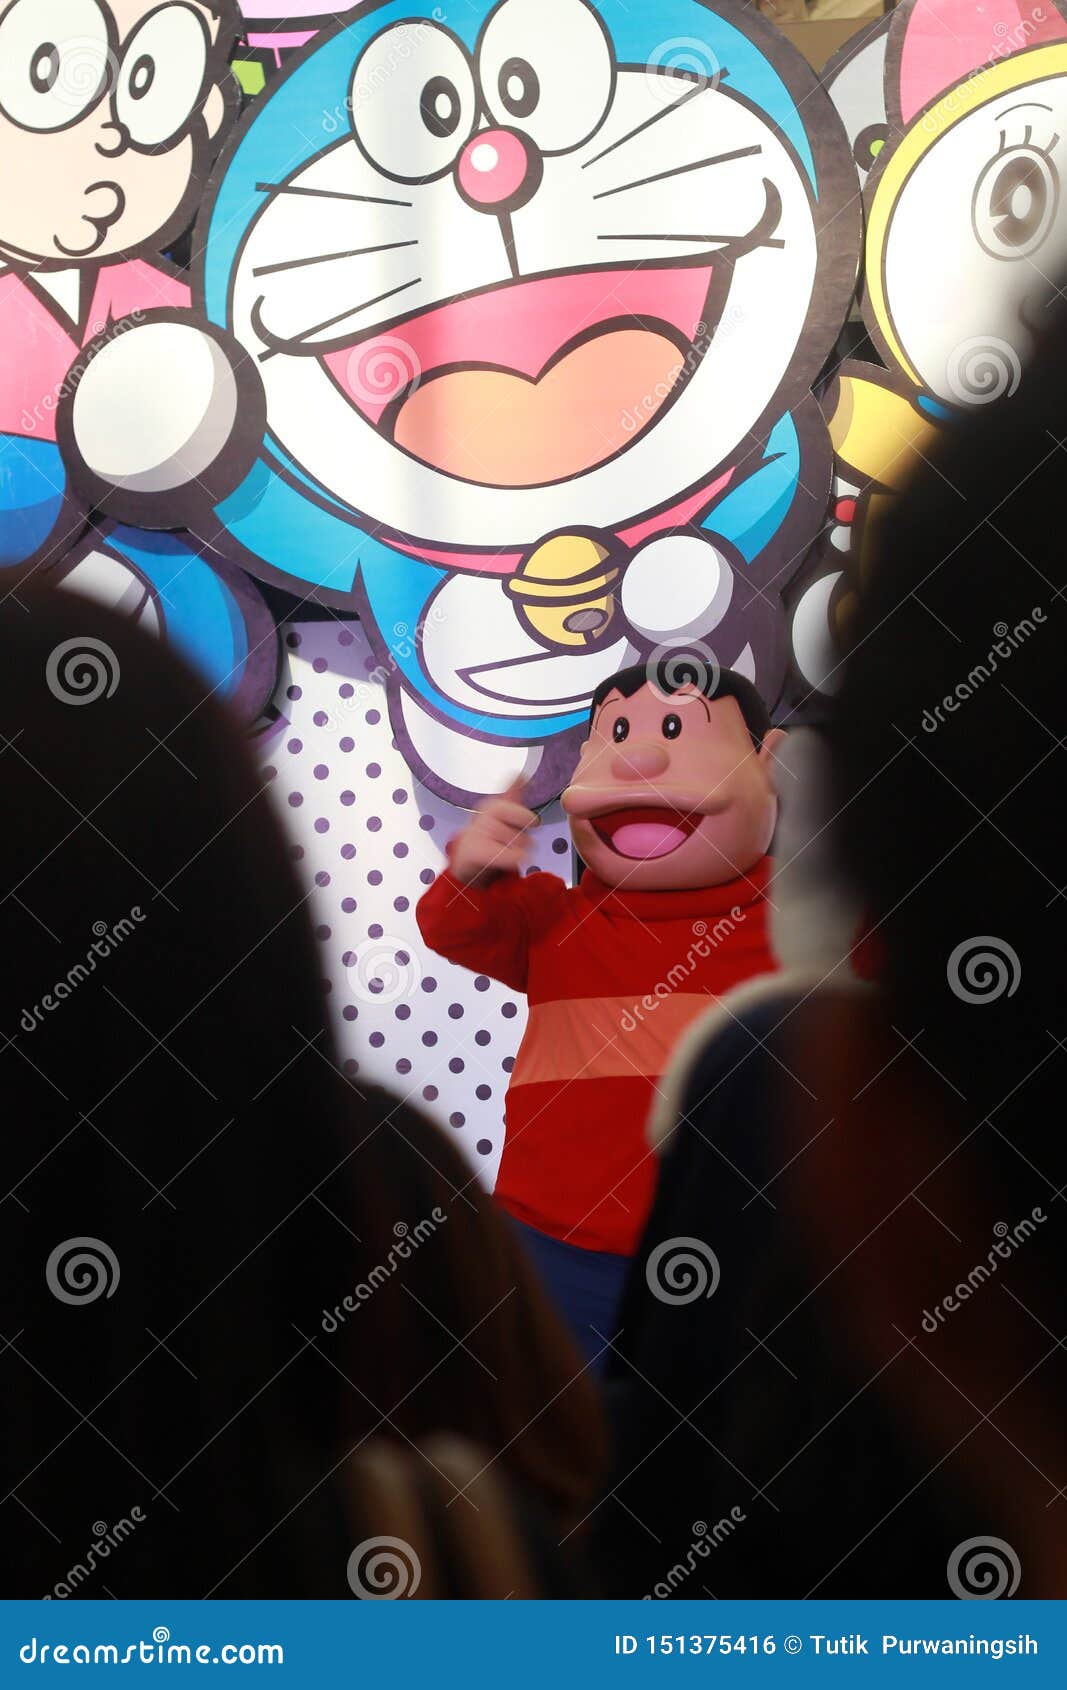 23 June 2019, Doraemon, Nobi Nobita, Takeshi Goda or Giant, Shizuka  Minamoto, Suneo Honekawa Cartoon Character at AEON Editorial Photo - Image  of tangerang, suneo: 151375416